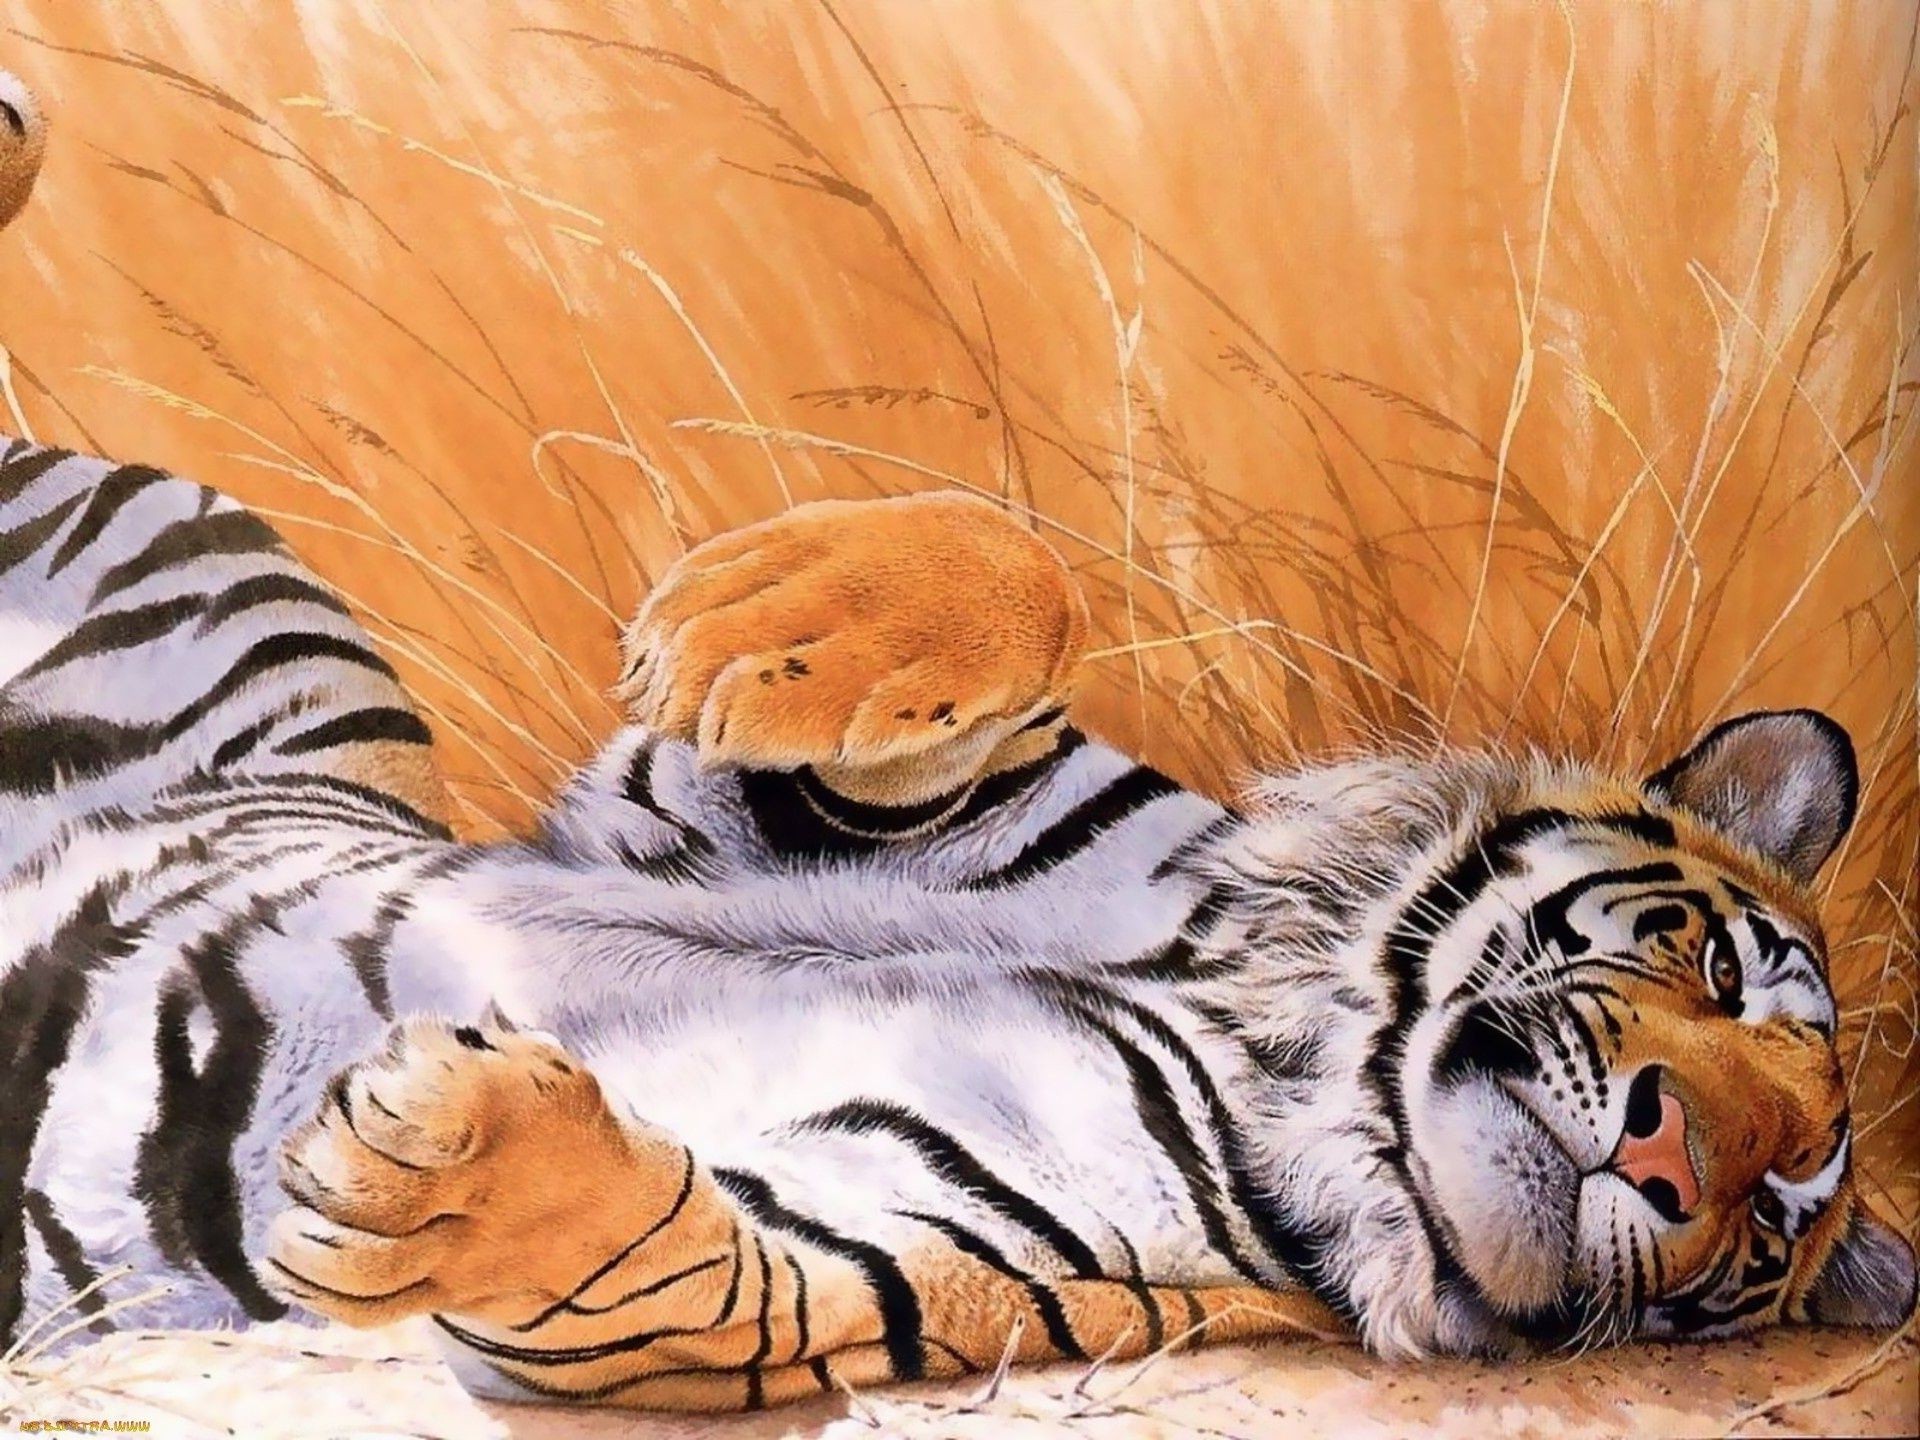 tigers cat mammal tiger wildlife animal stripe wild zoo nature portrait fur hunter predator safari head